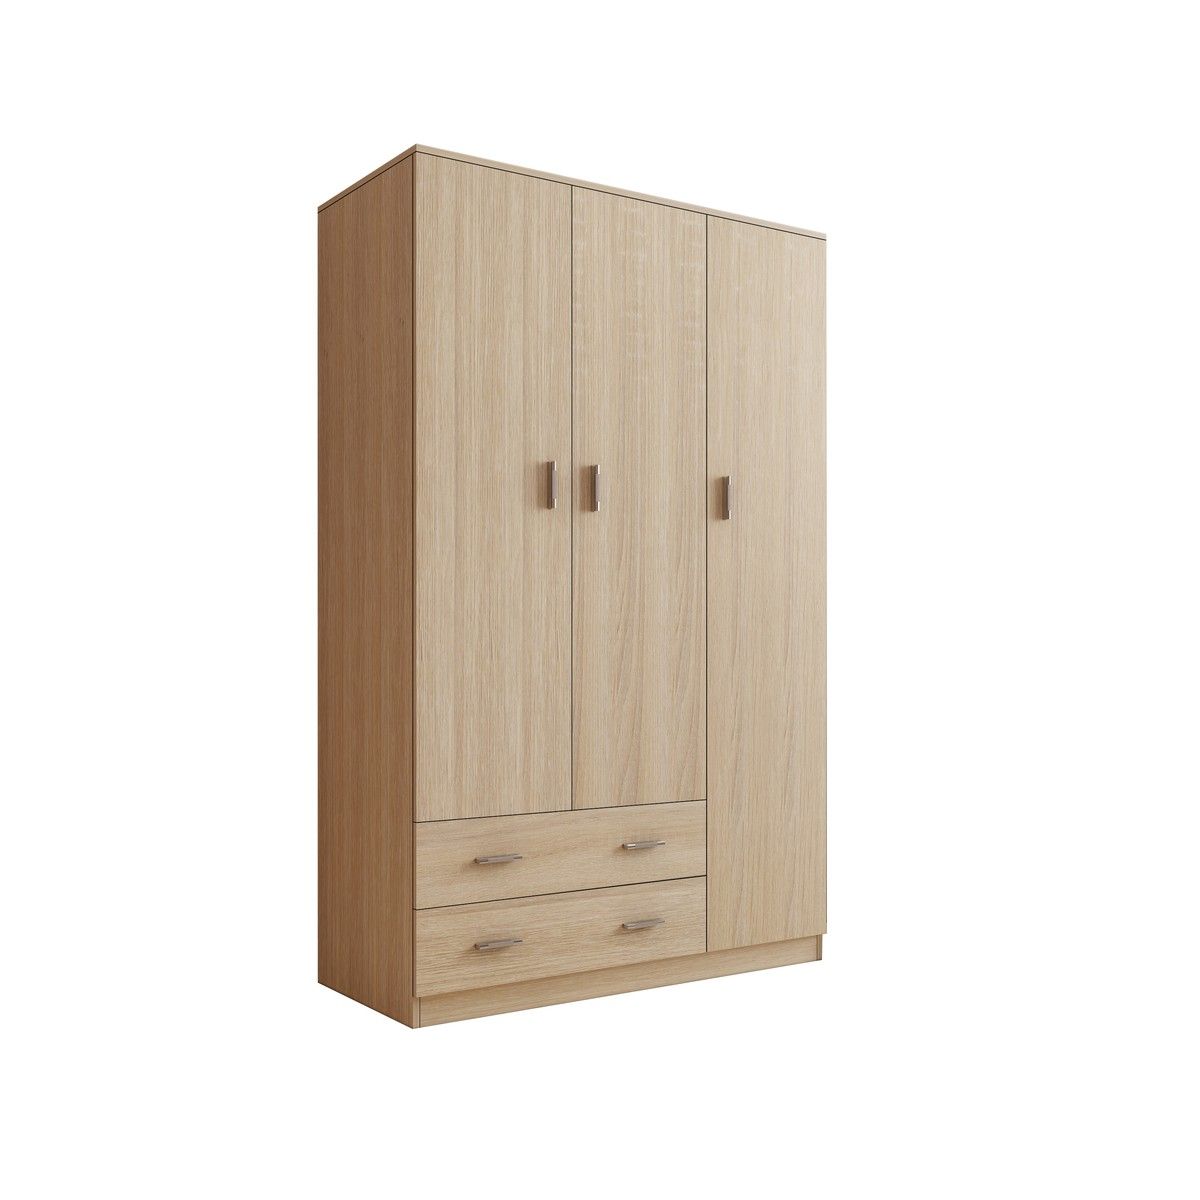 Oak Wardrobe Cabinet Wood Bedroom Clothes Storage Organiser Cupboard 3 ...